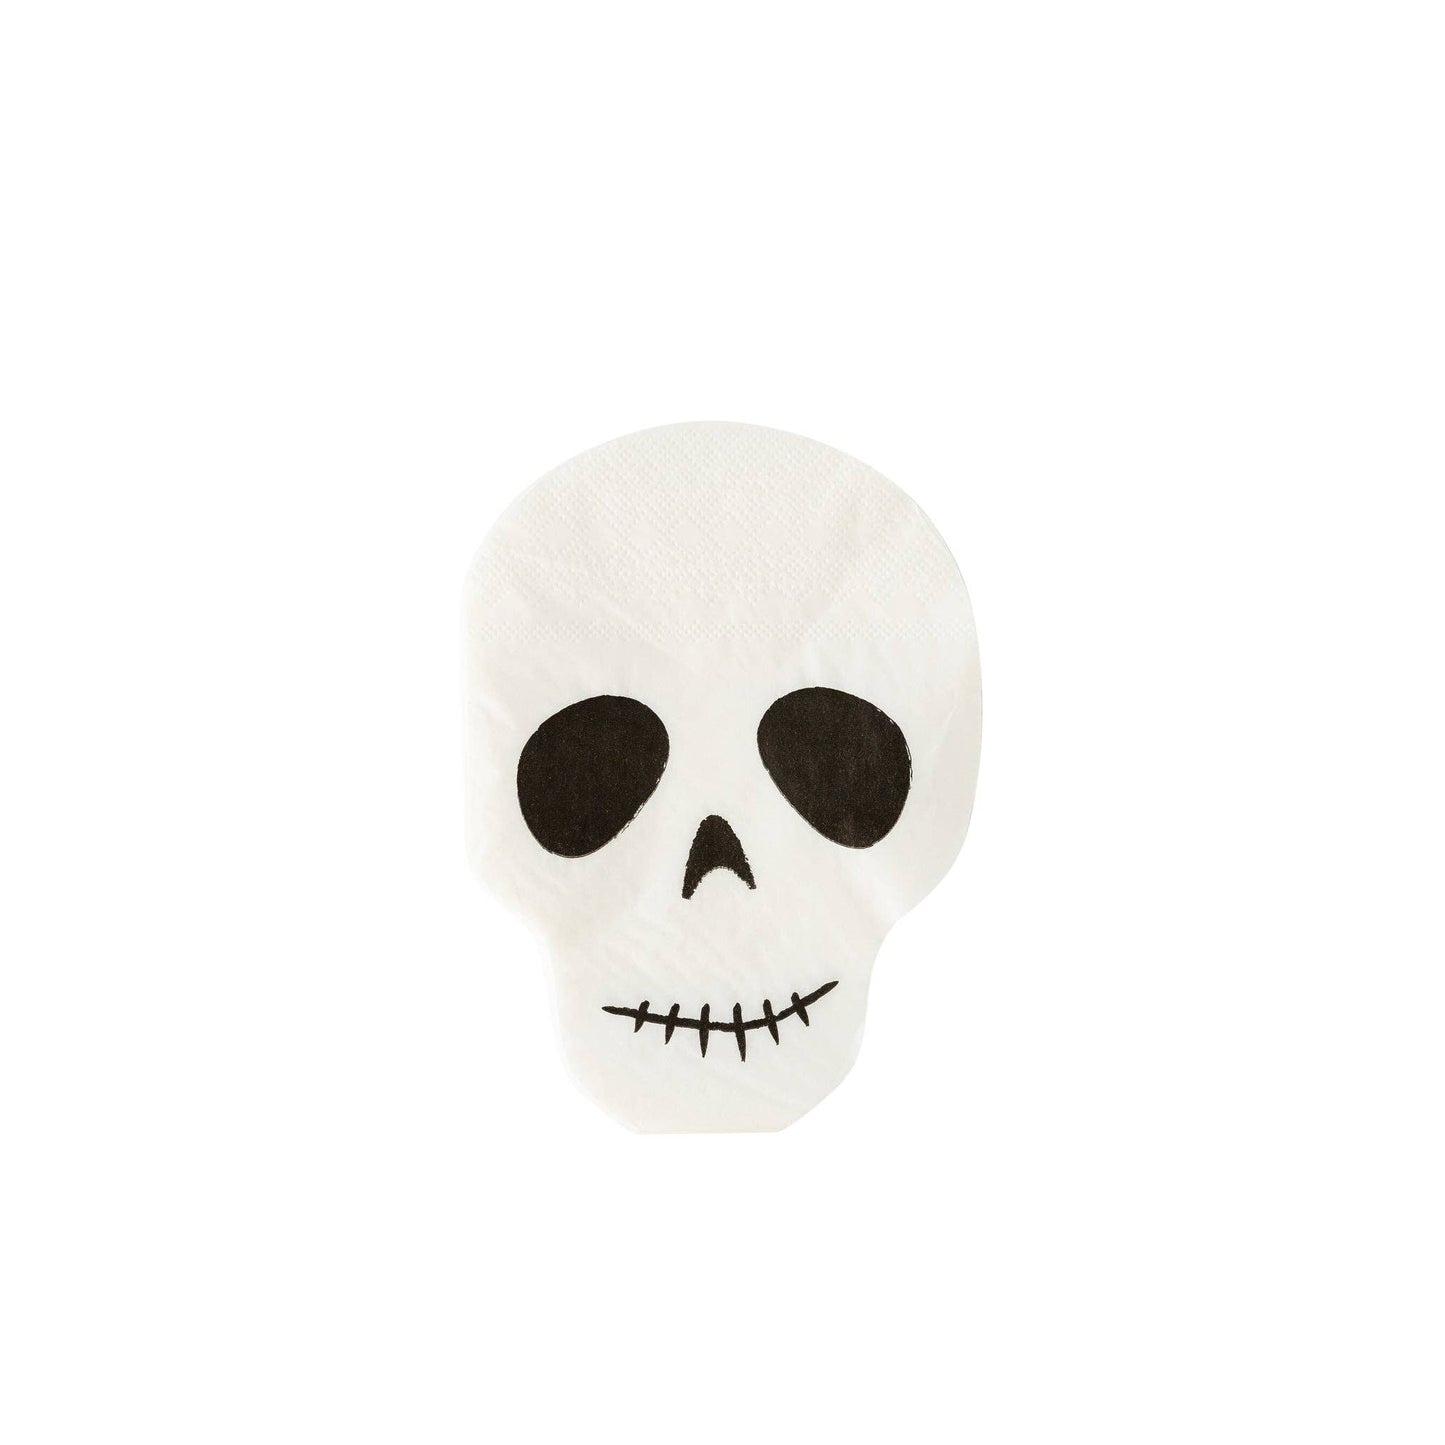 Skull Shaped Paper Guest Towel Napkin - SimplySoiree